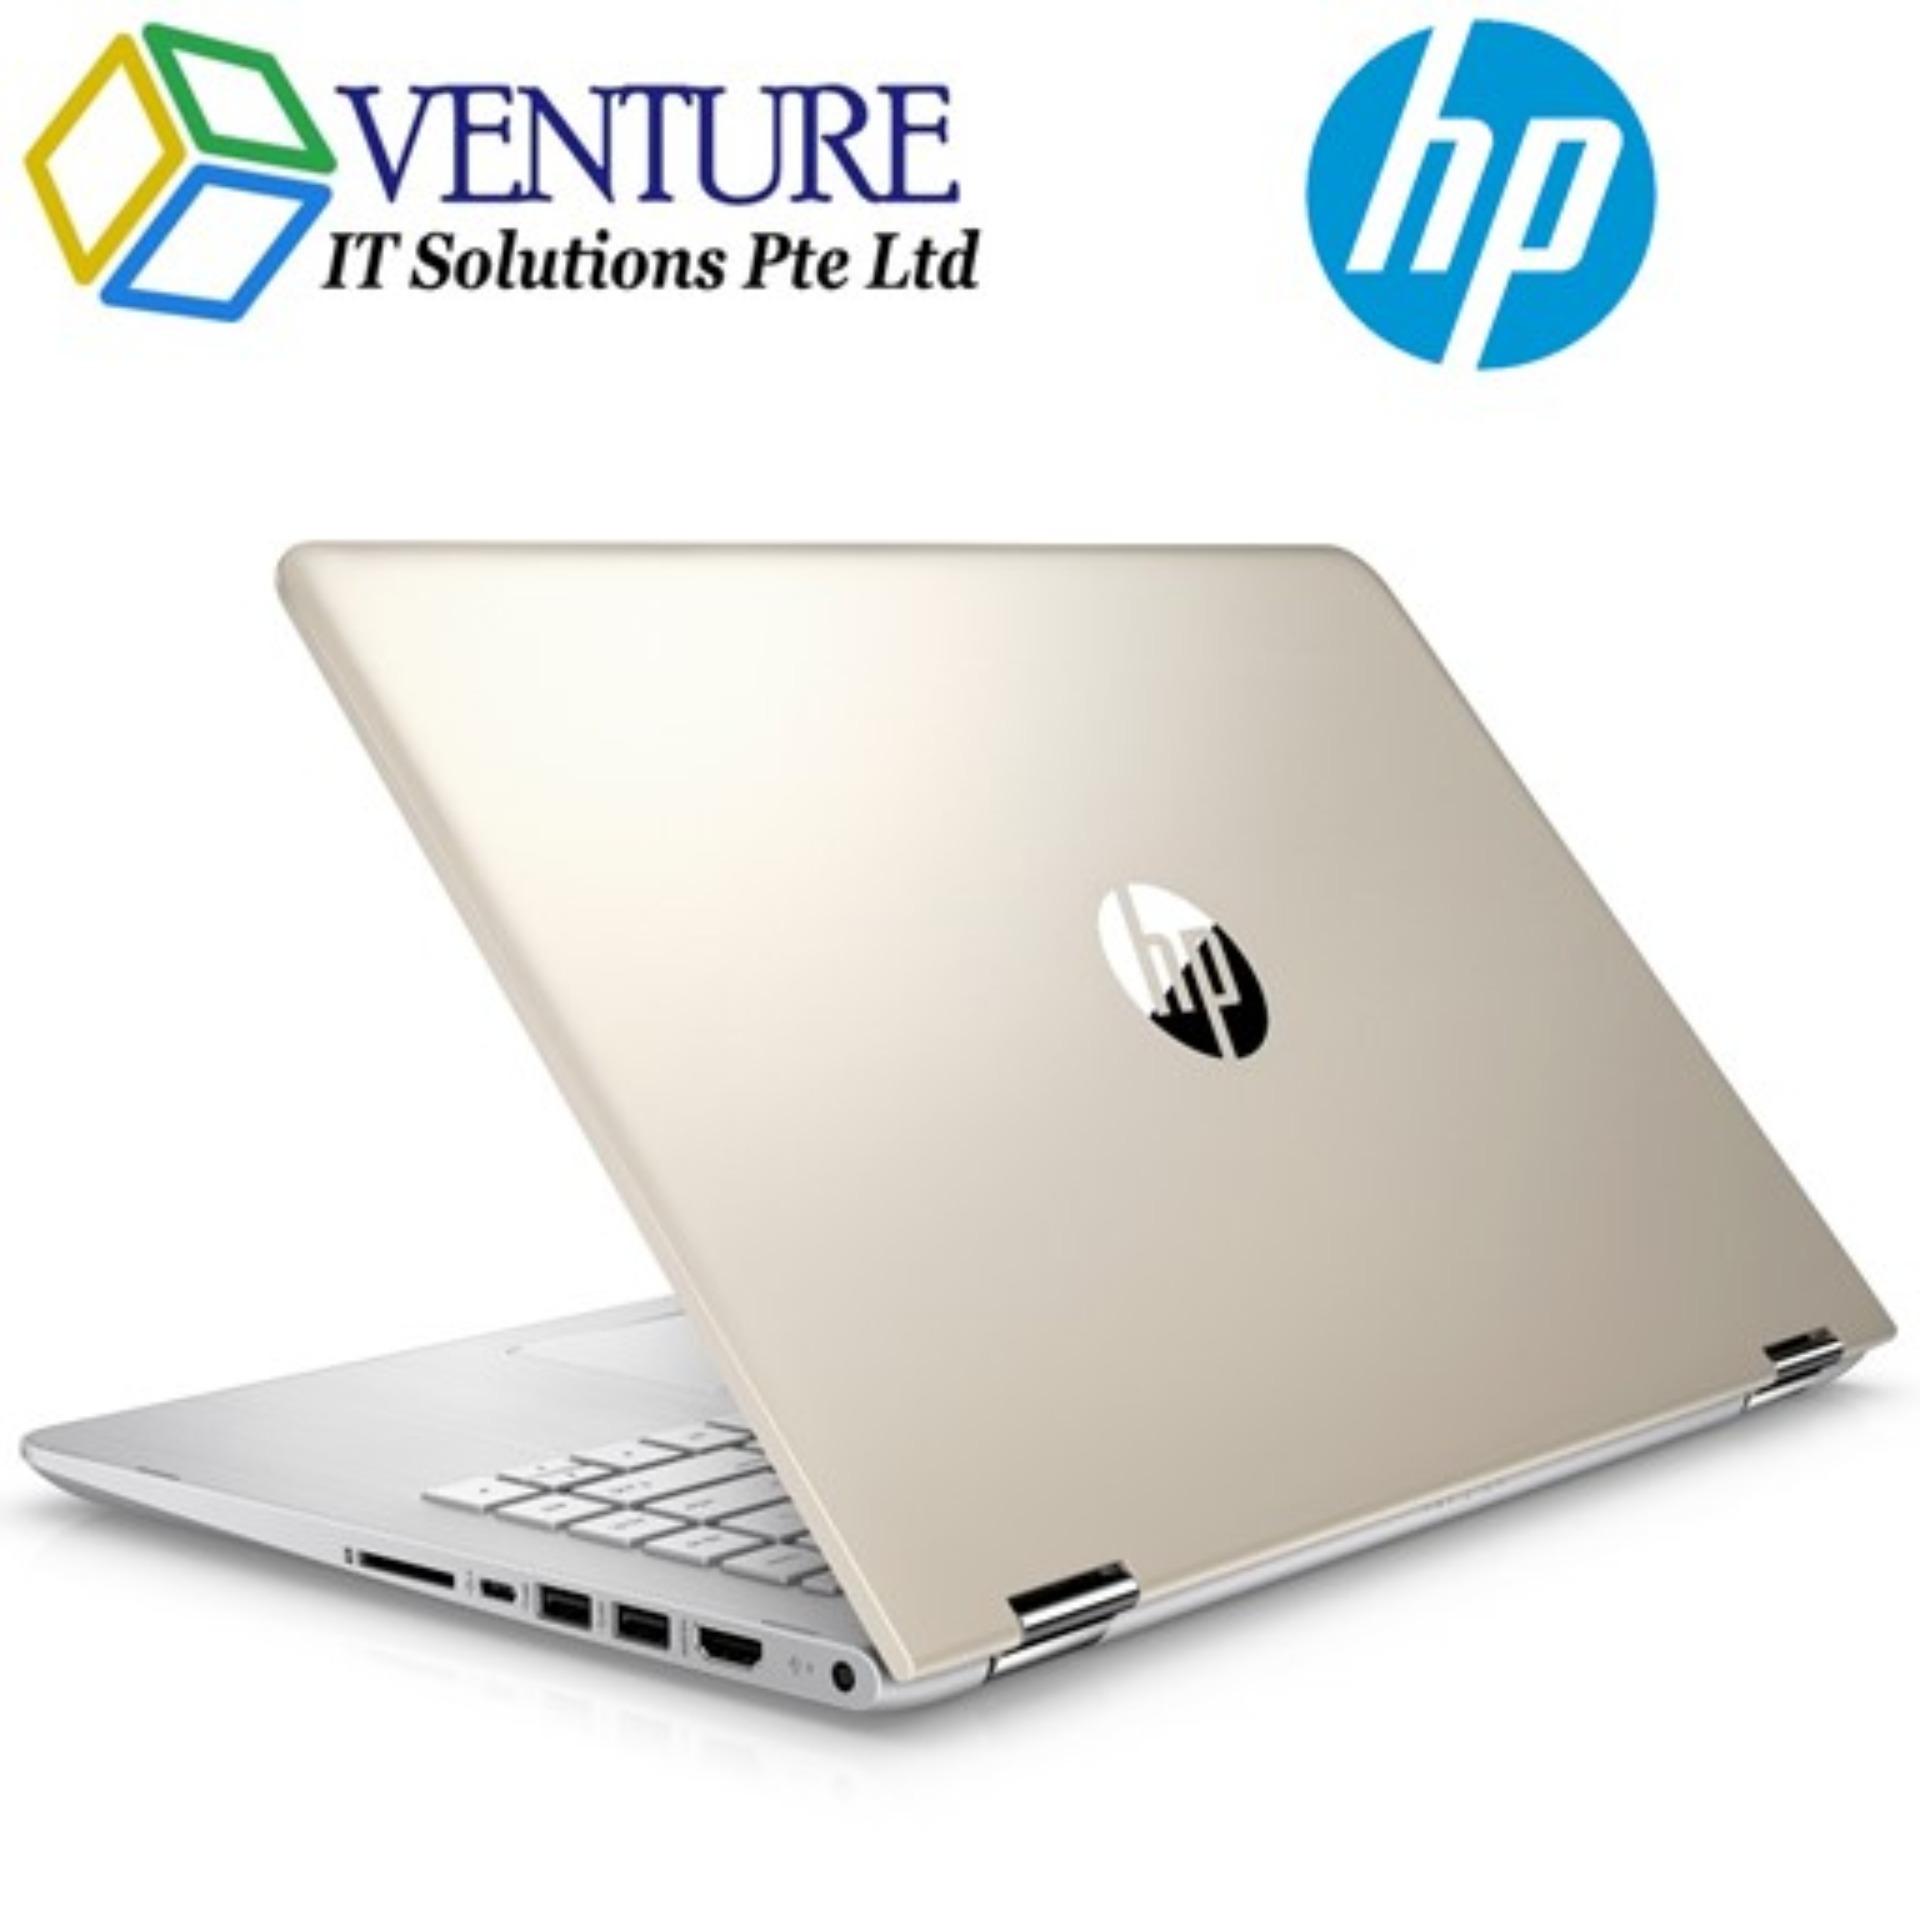 [NEW 8TH GEN] HP PAVILION x360 CONVERTIBLE 14 BA108TX I5-8250U 8GB 128SSD+1TB NVIDIA-940MX-2GB 14.0